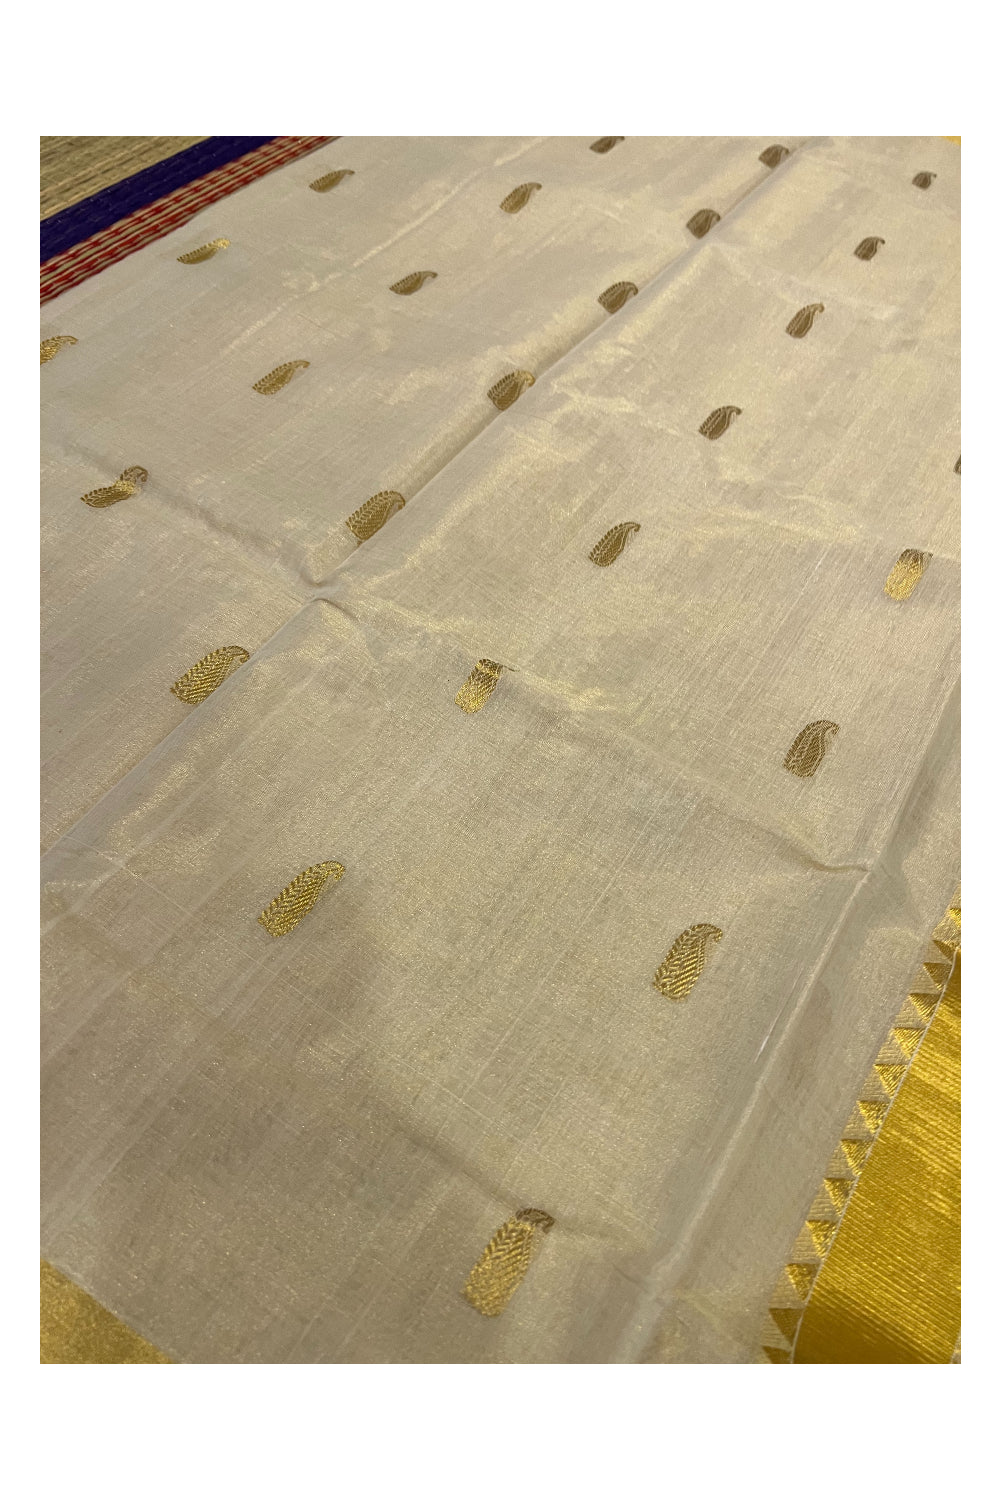 Southloom Premium Handloom Tissue Kasavu Saree with Hand Woven Motifs